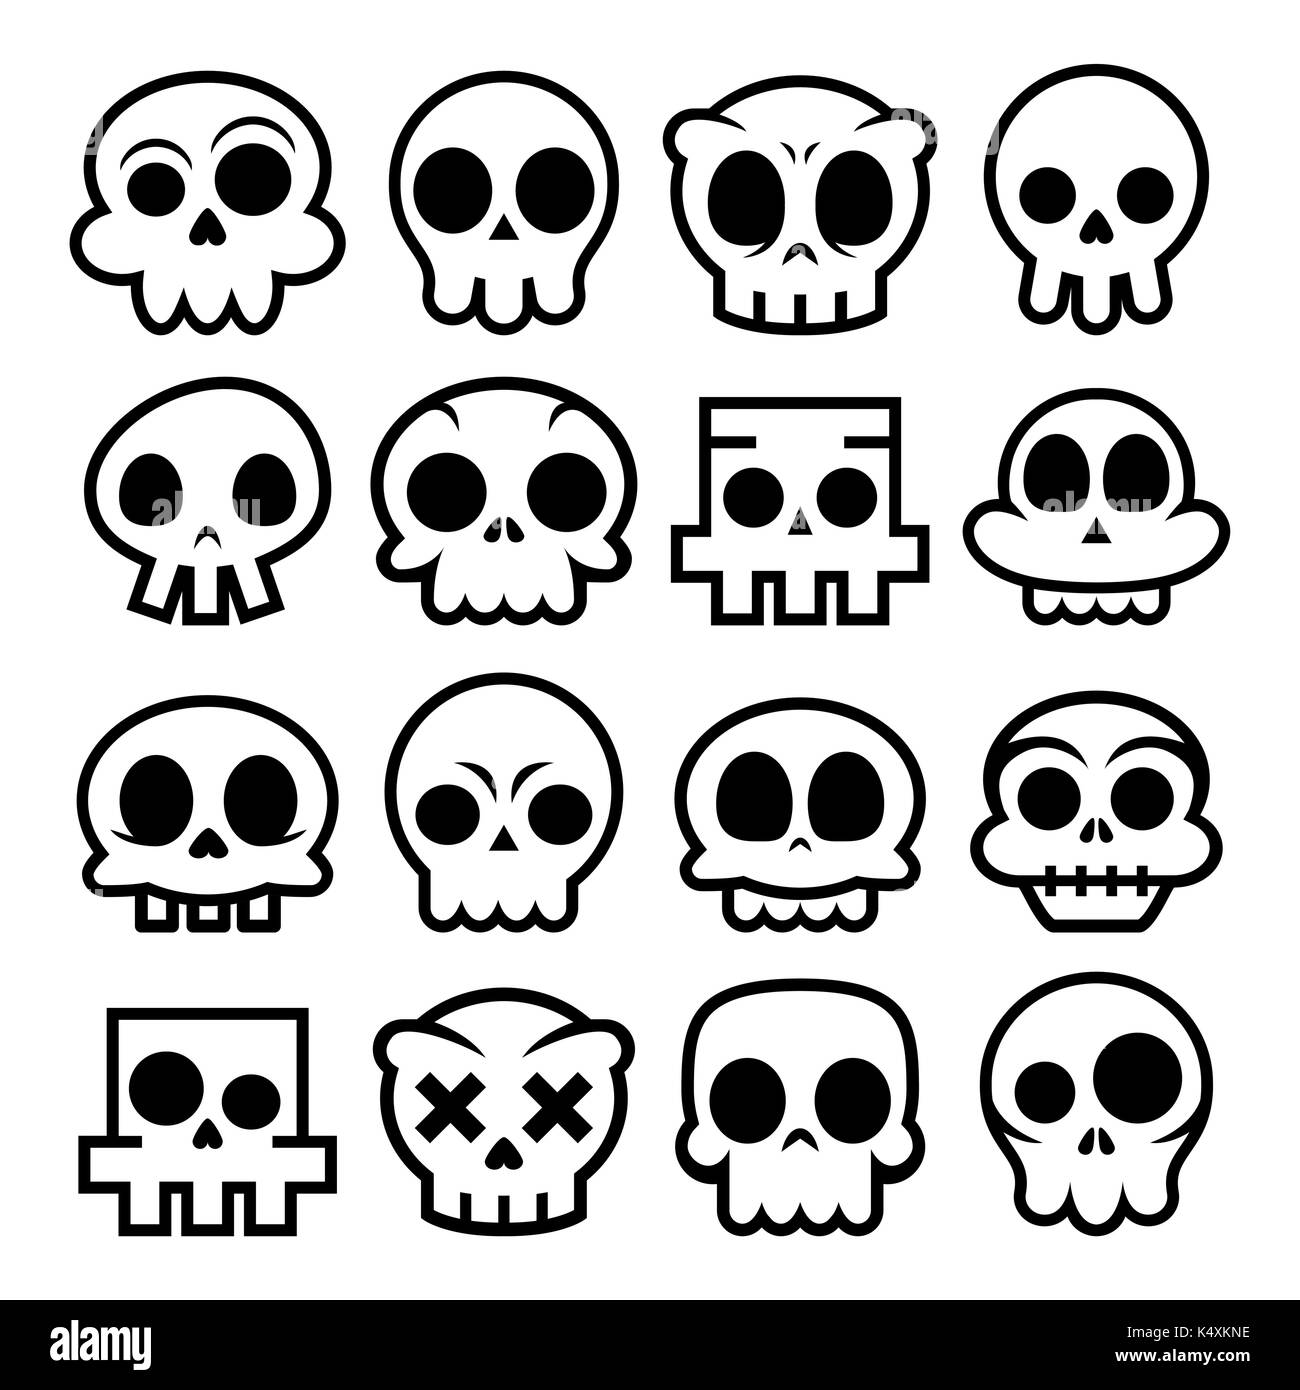 Halloween vector cartoon skull icons, Mexican cute sugar skulls design set, Dia de los Muertos Skull collection in black isolated on white, decoration Stock Vector